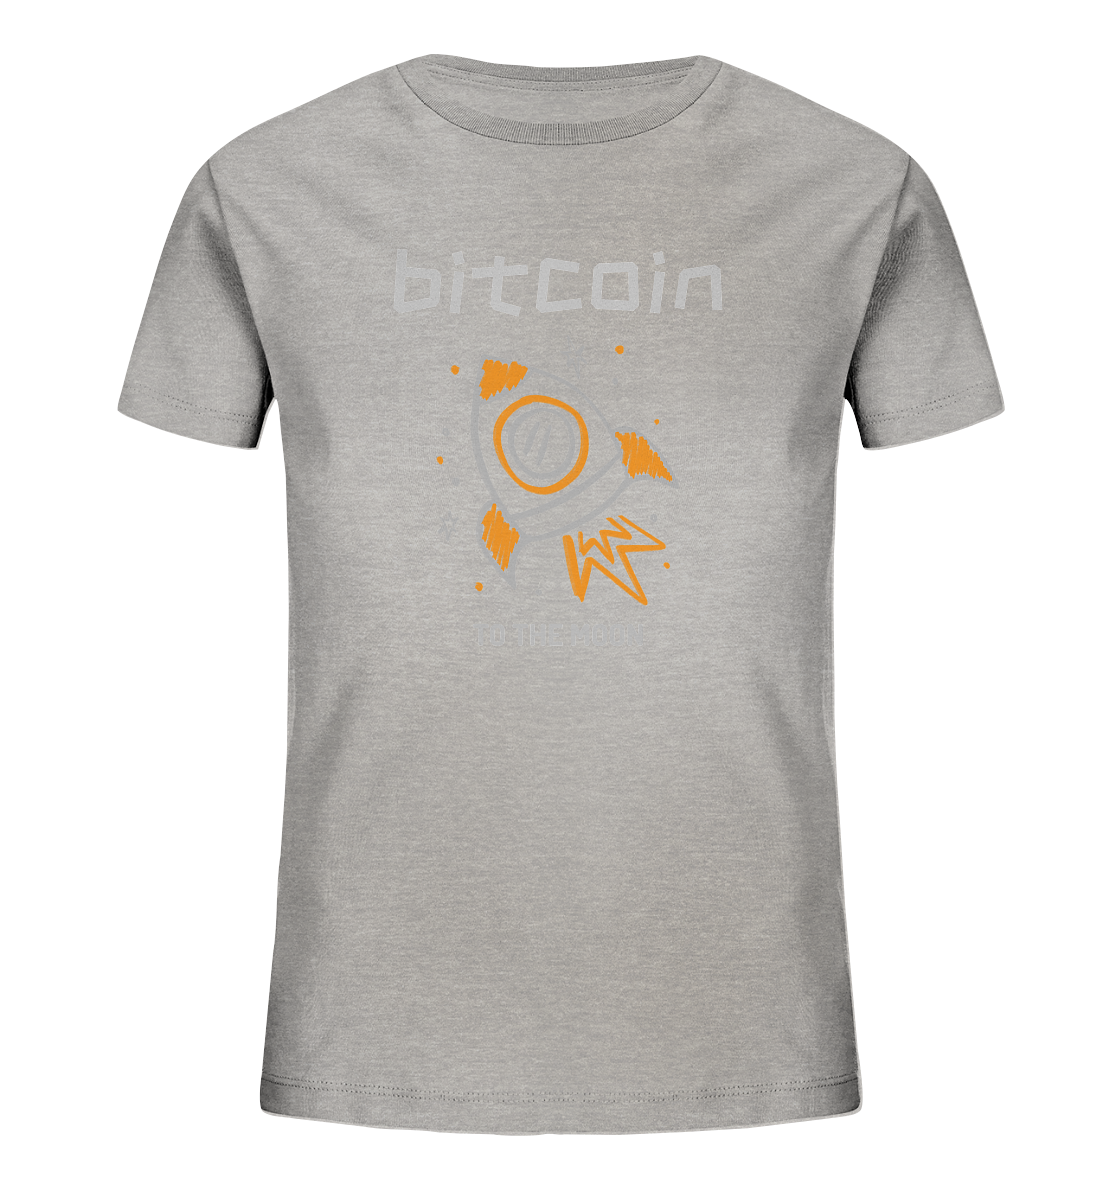 Bitcoin to the moon - Kids Organic Shirt